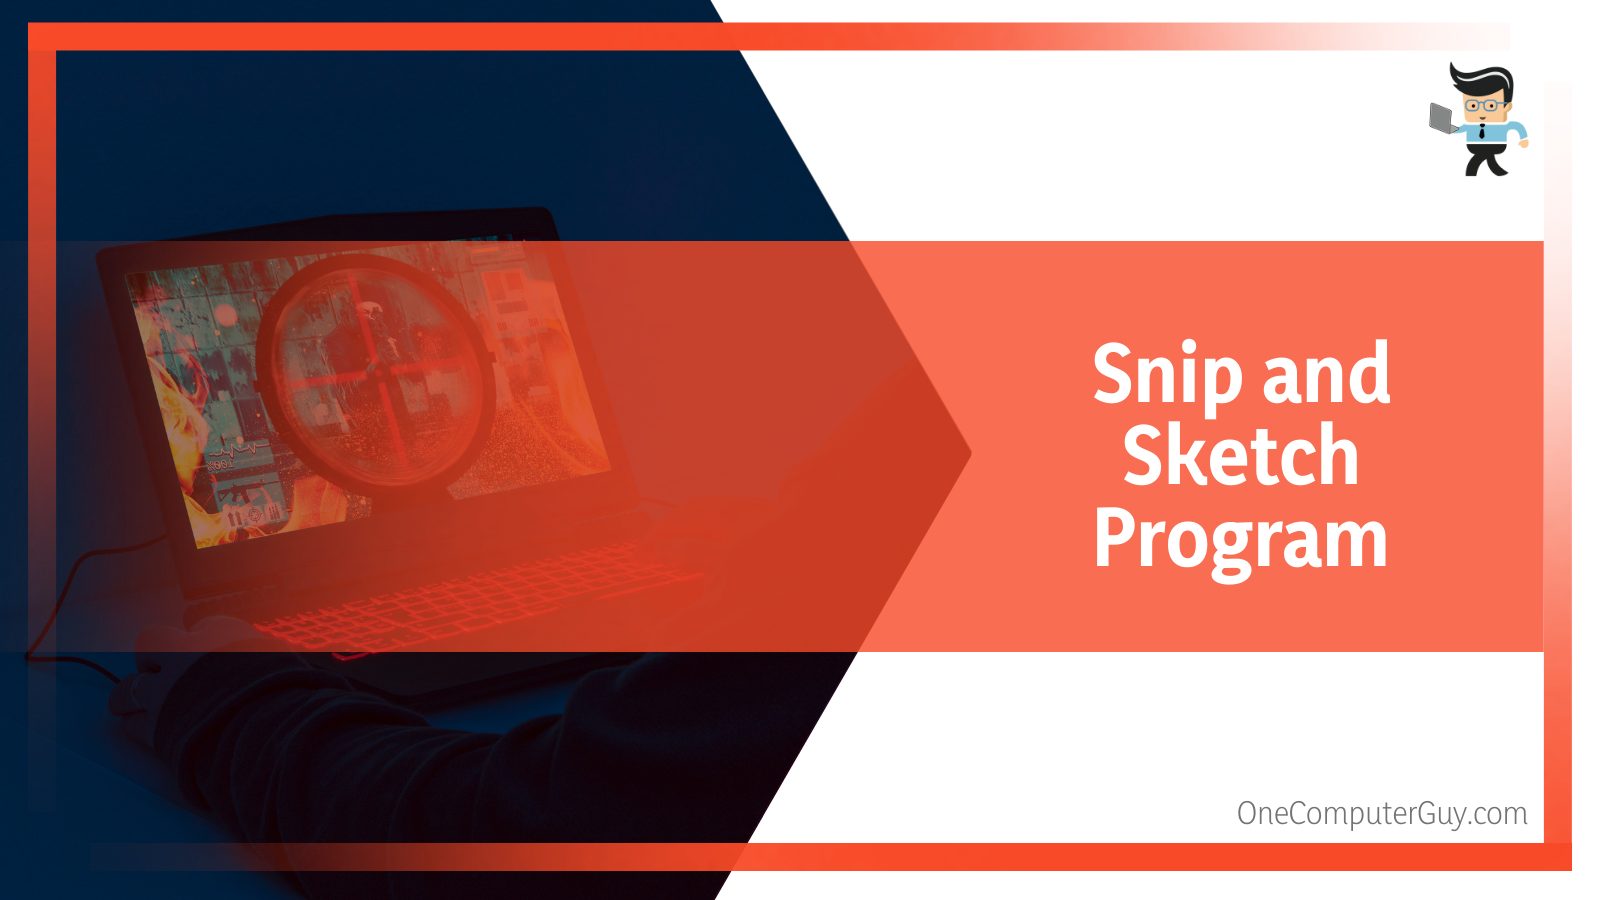 Snip and Sketch Program